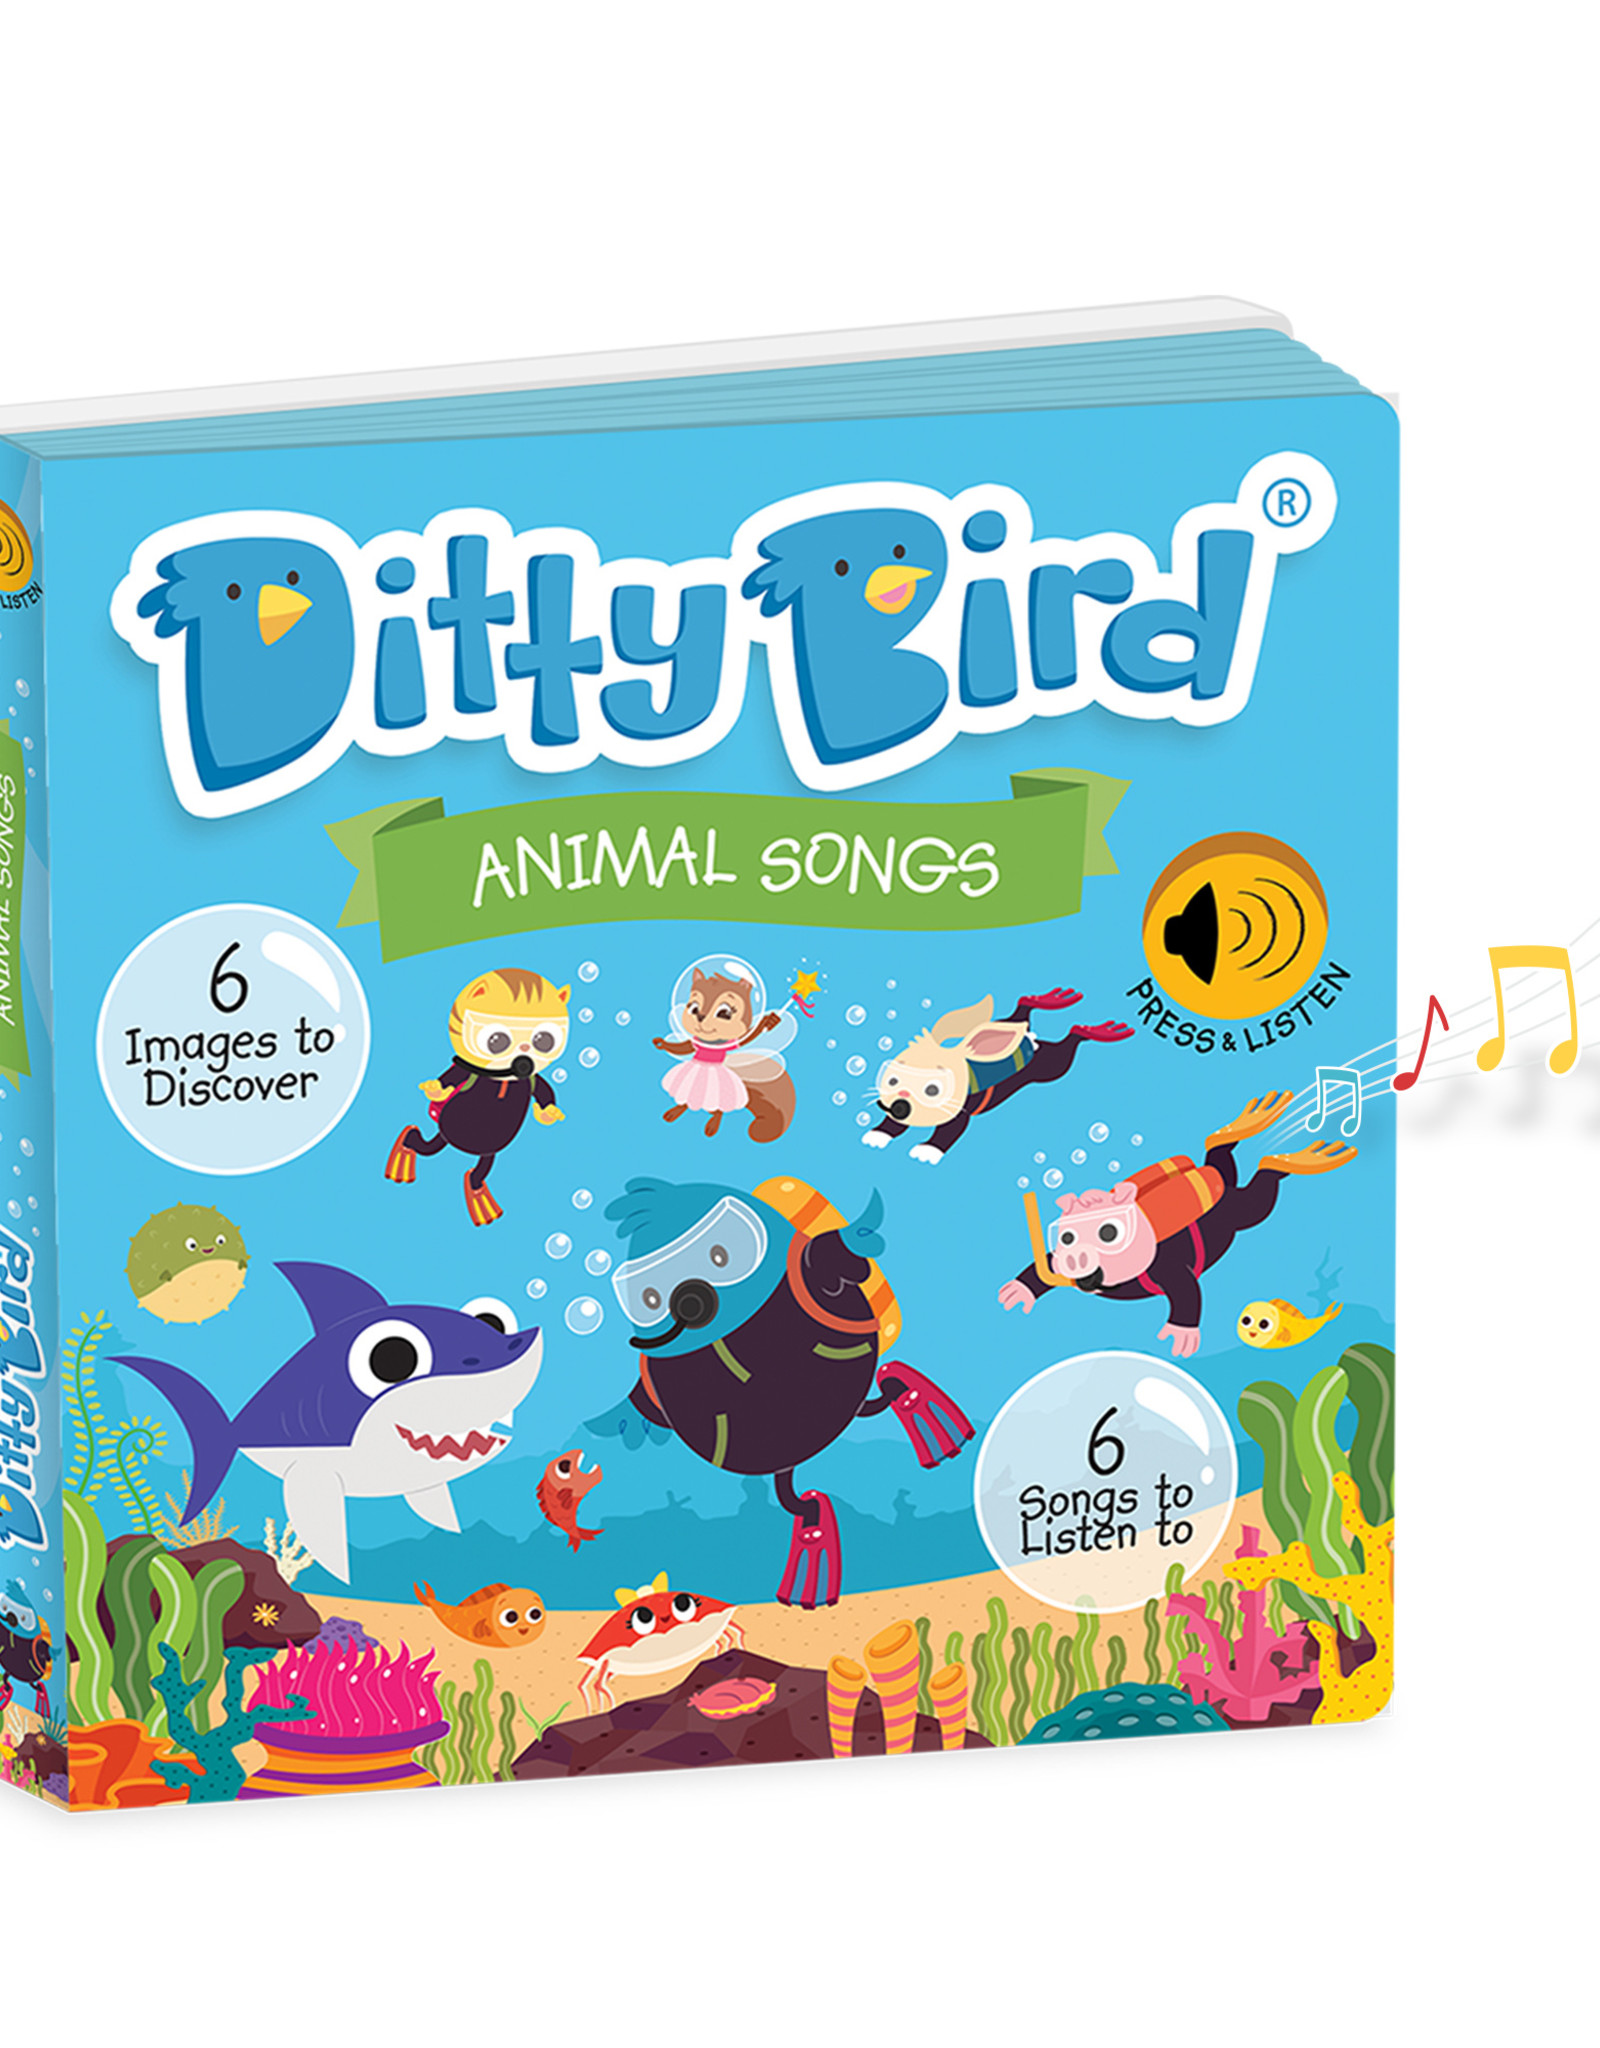 Ditty Bird Animal Songs